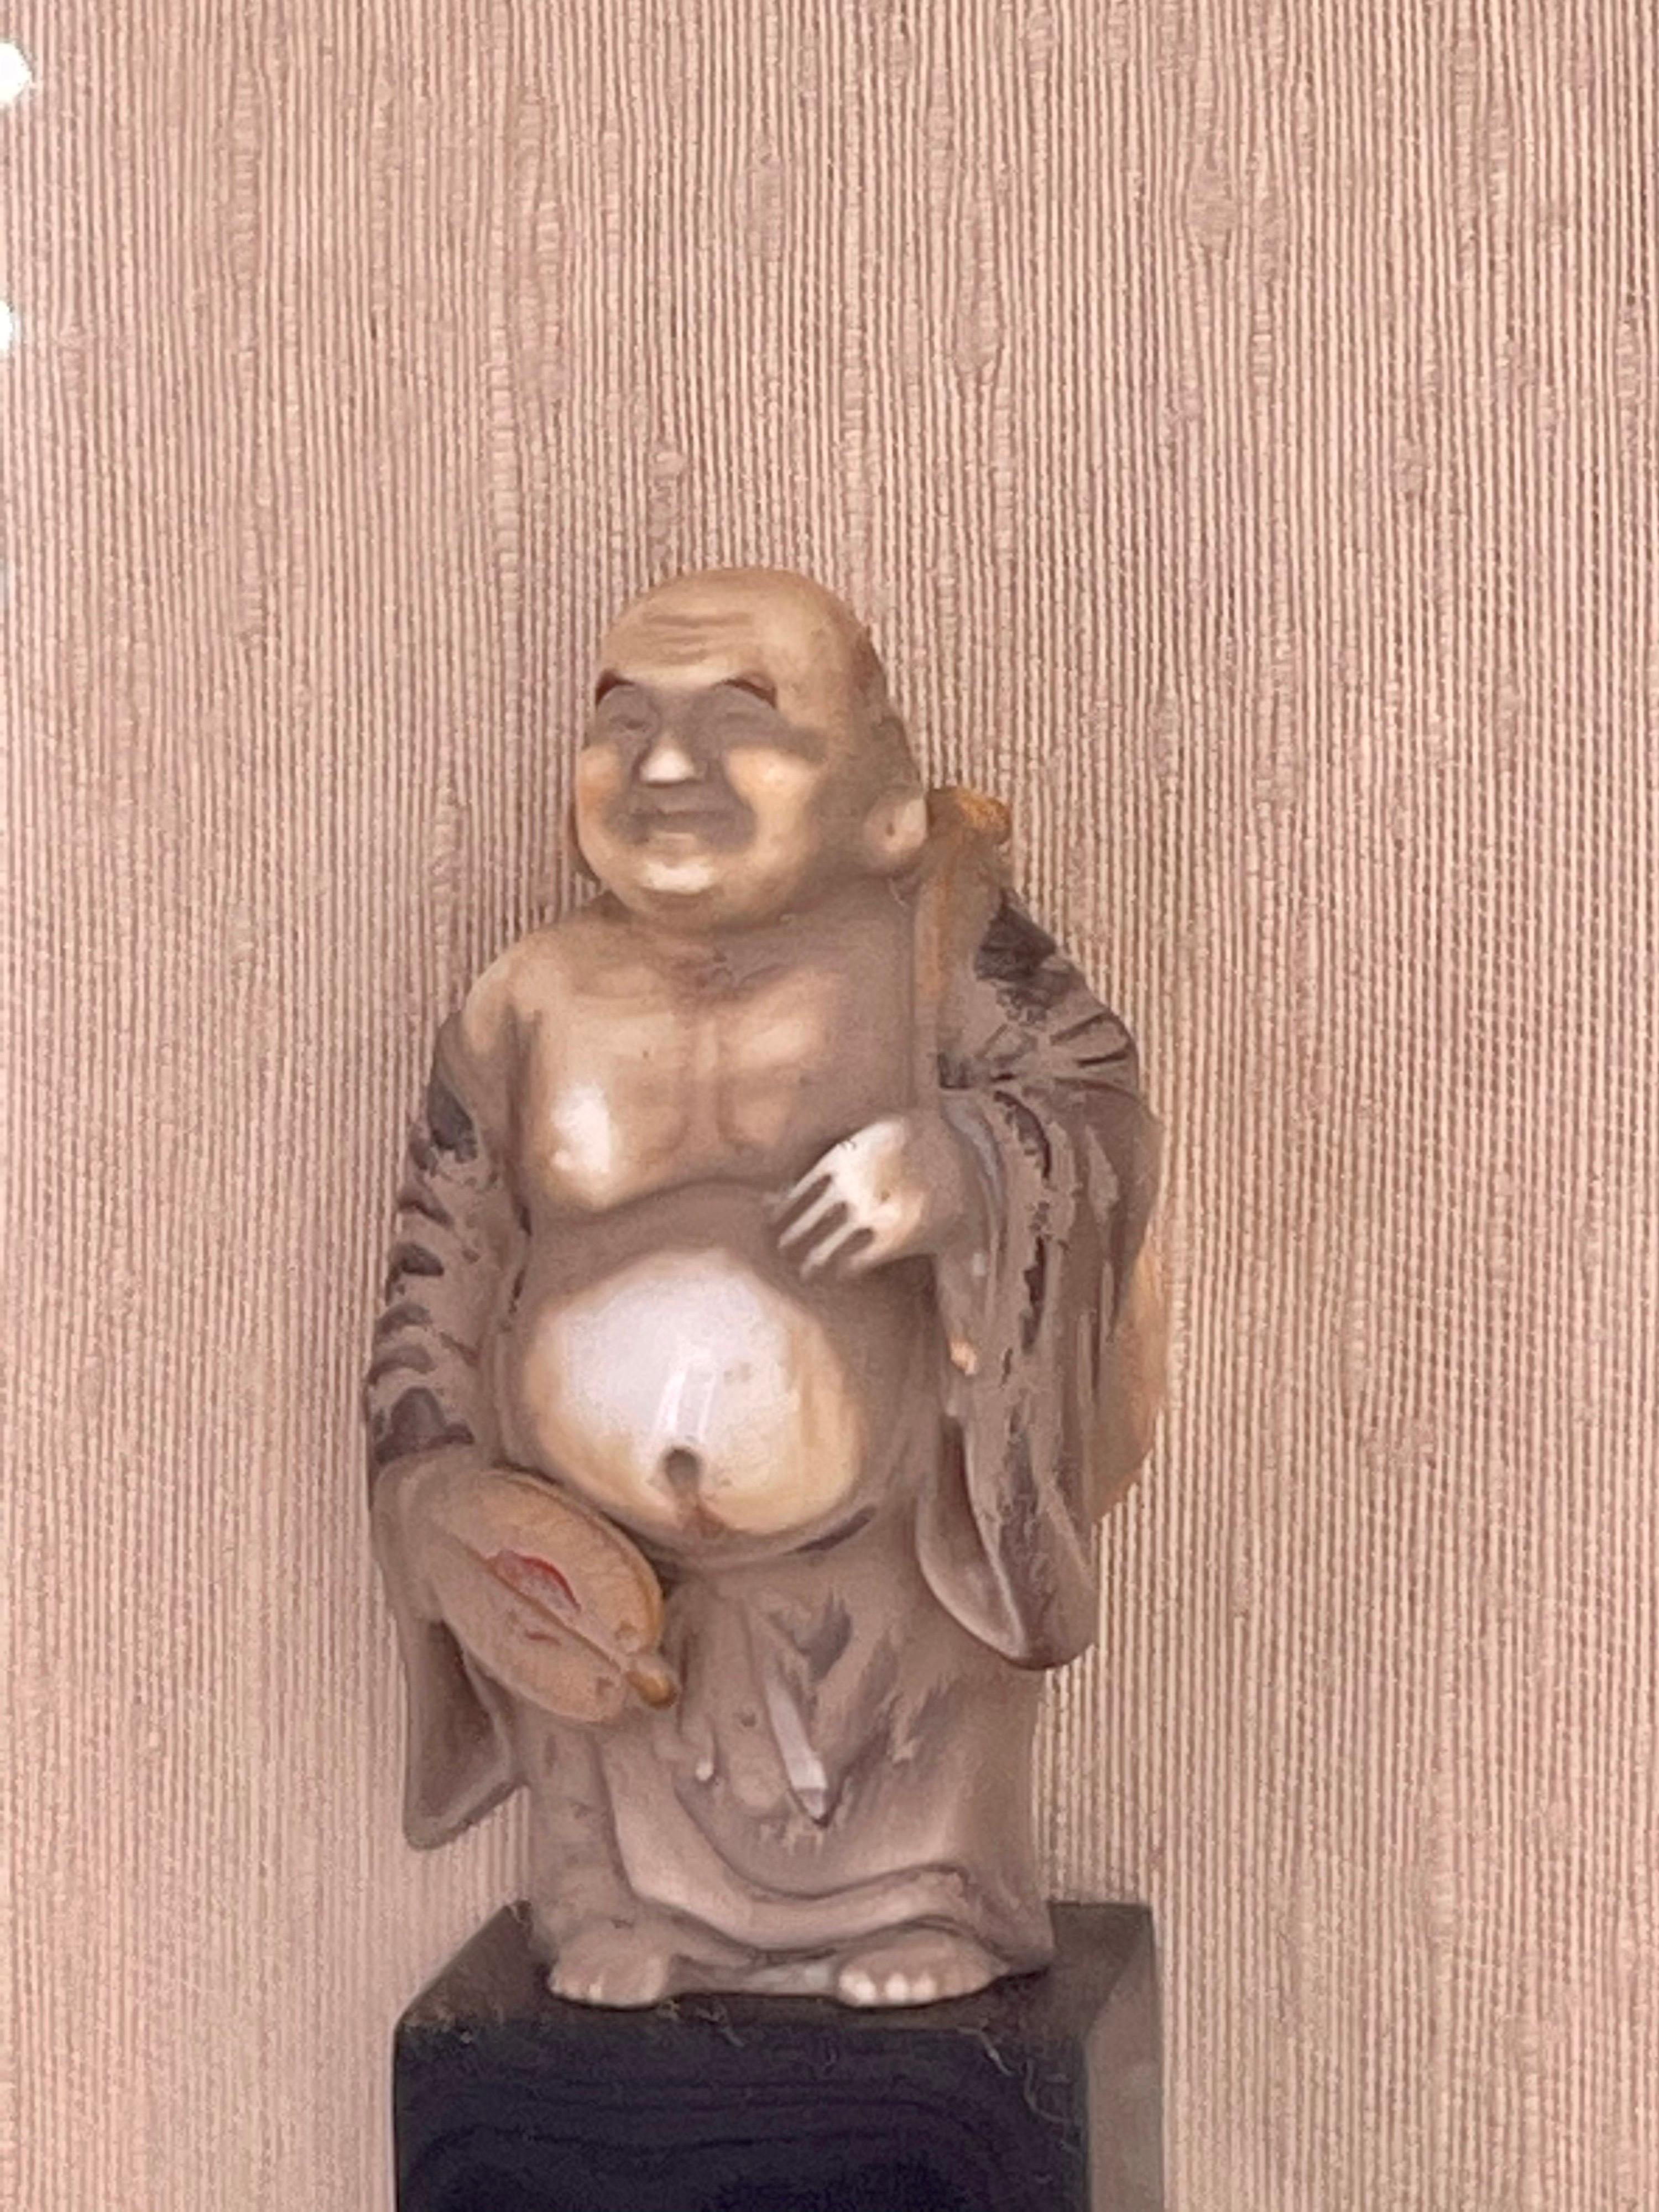 Nicely framed vintage Buddha Figurine, circa 1970s.